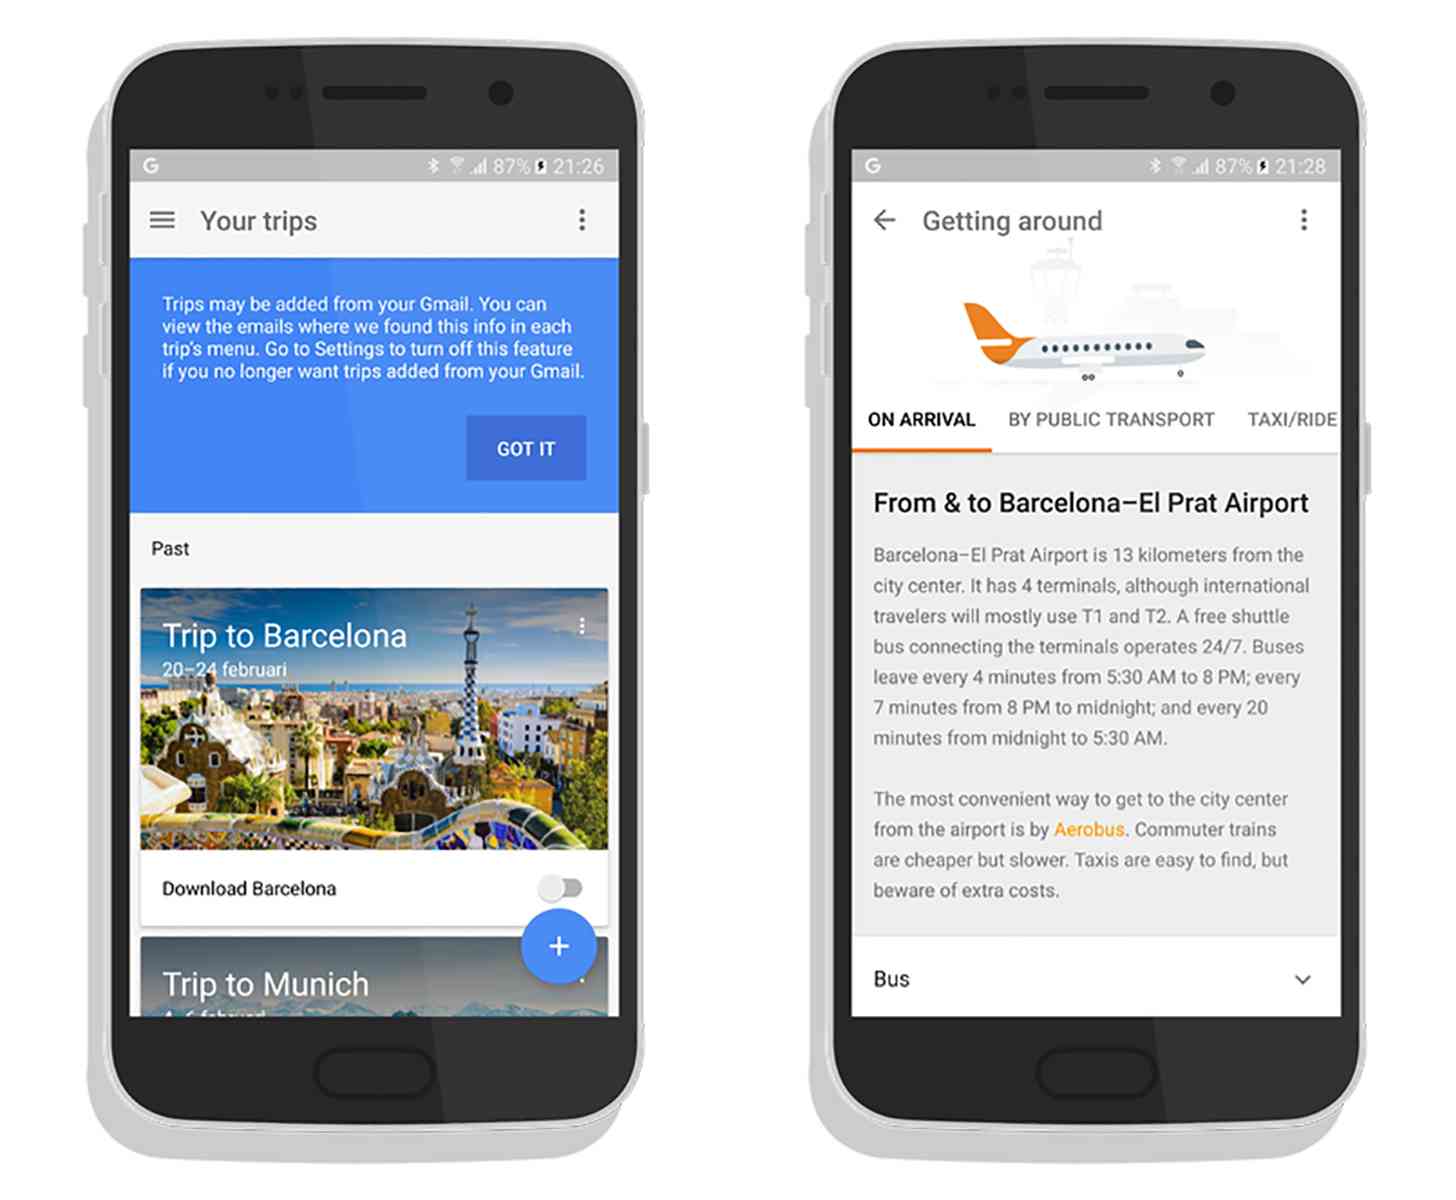 Google Trips Android app screenshots leak